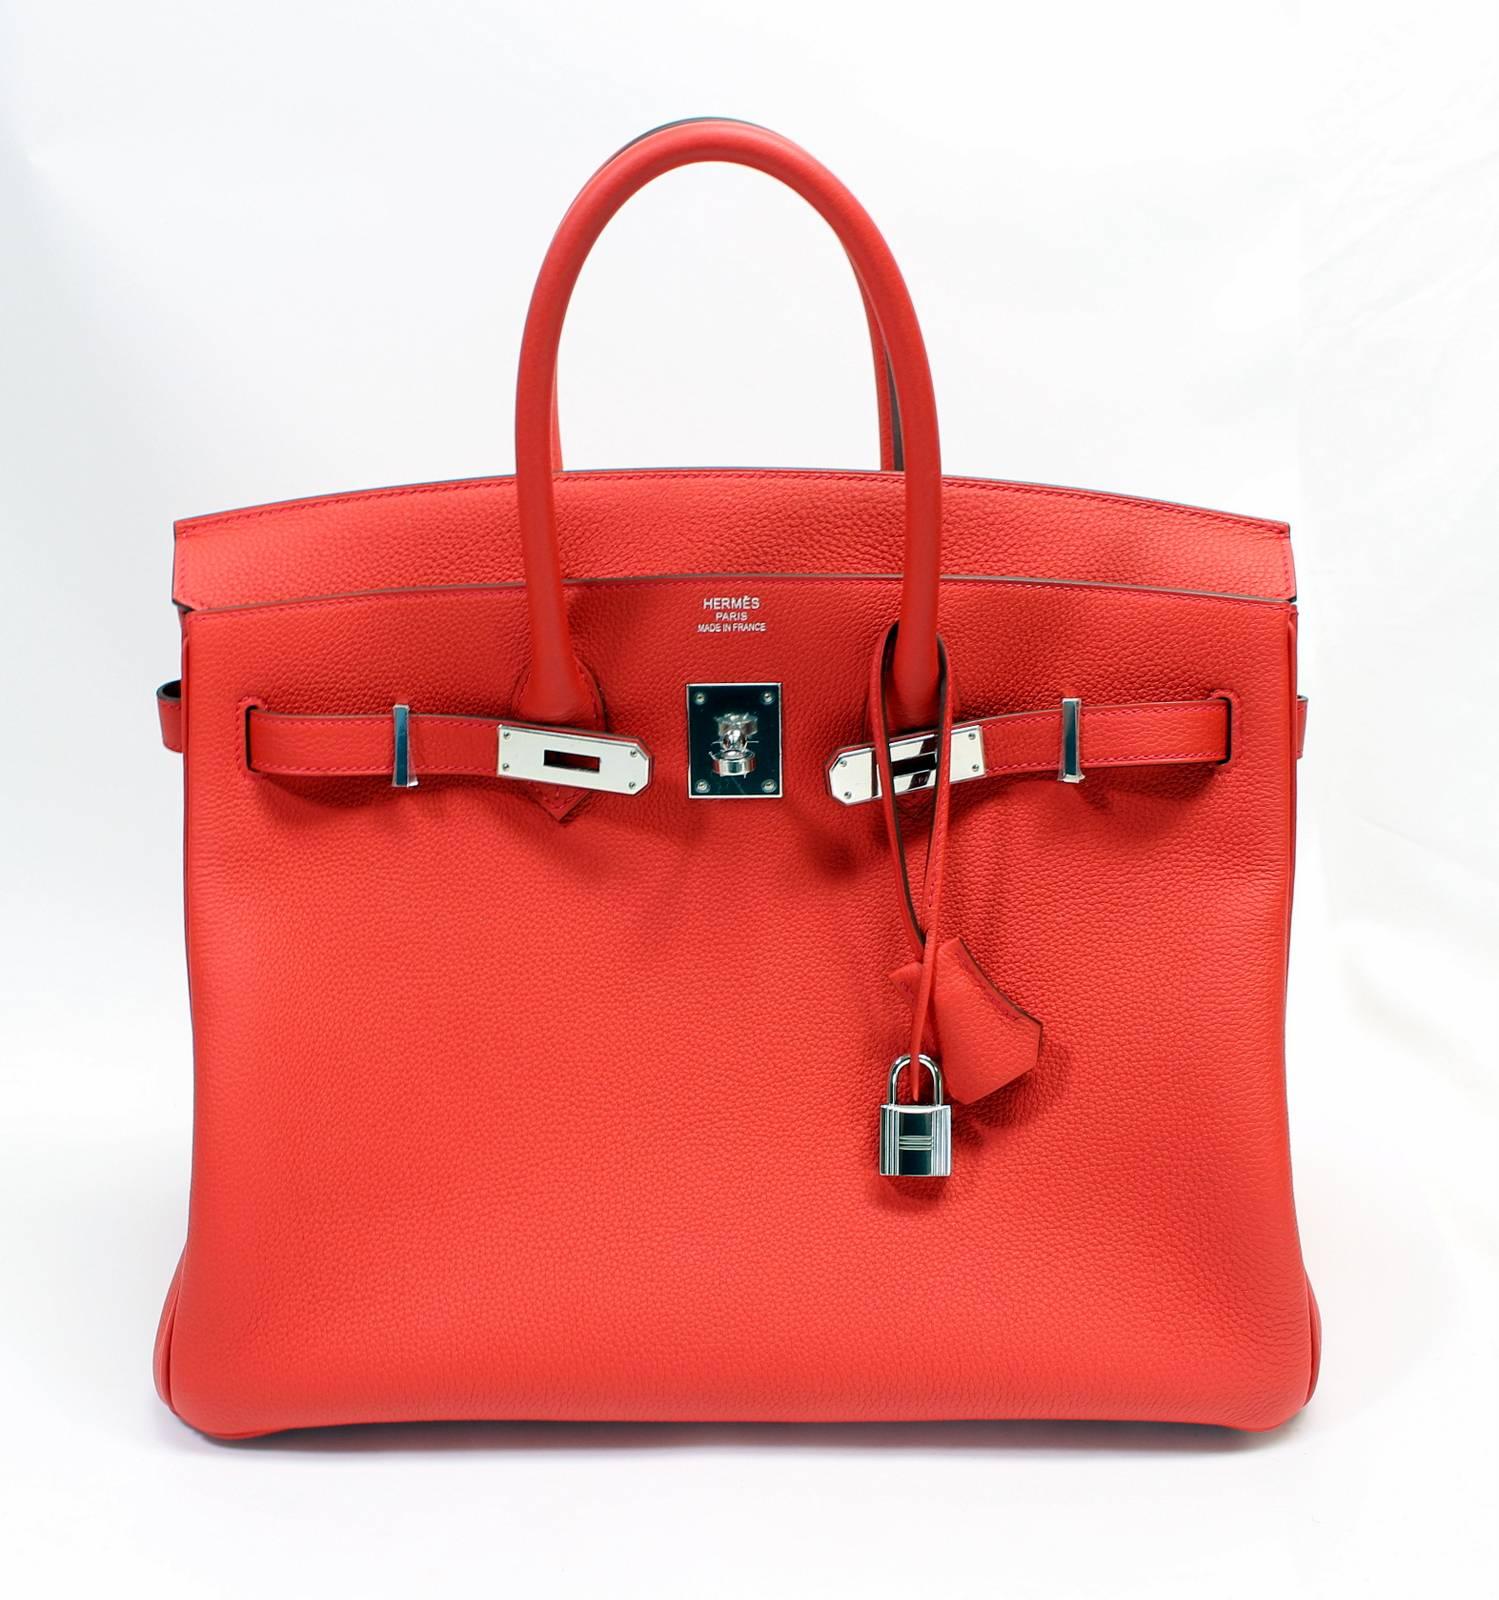 Hermès Geranium Togo 35 cm Birkin Bag with Palladium For Sale 5